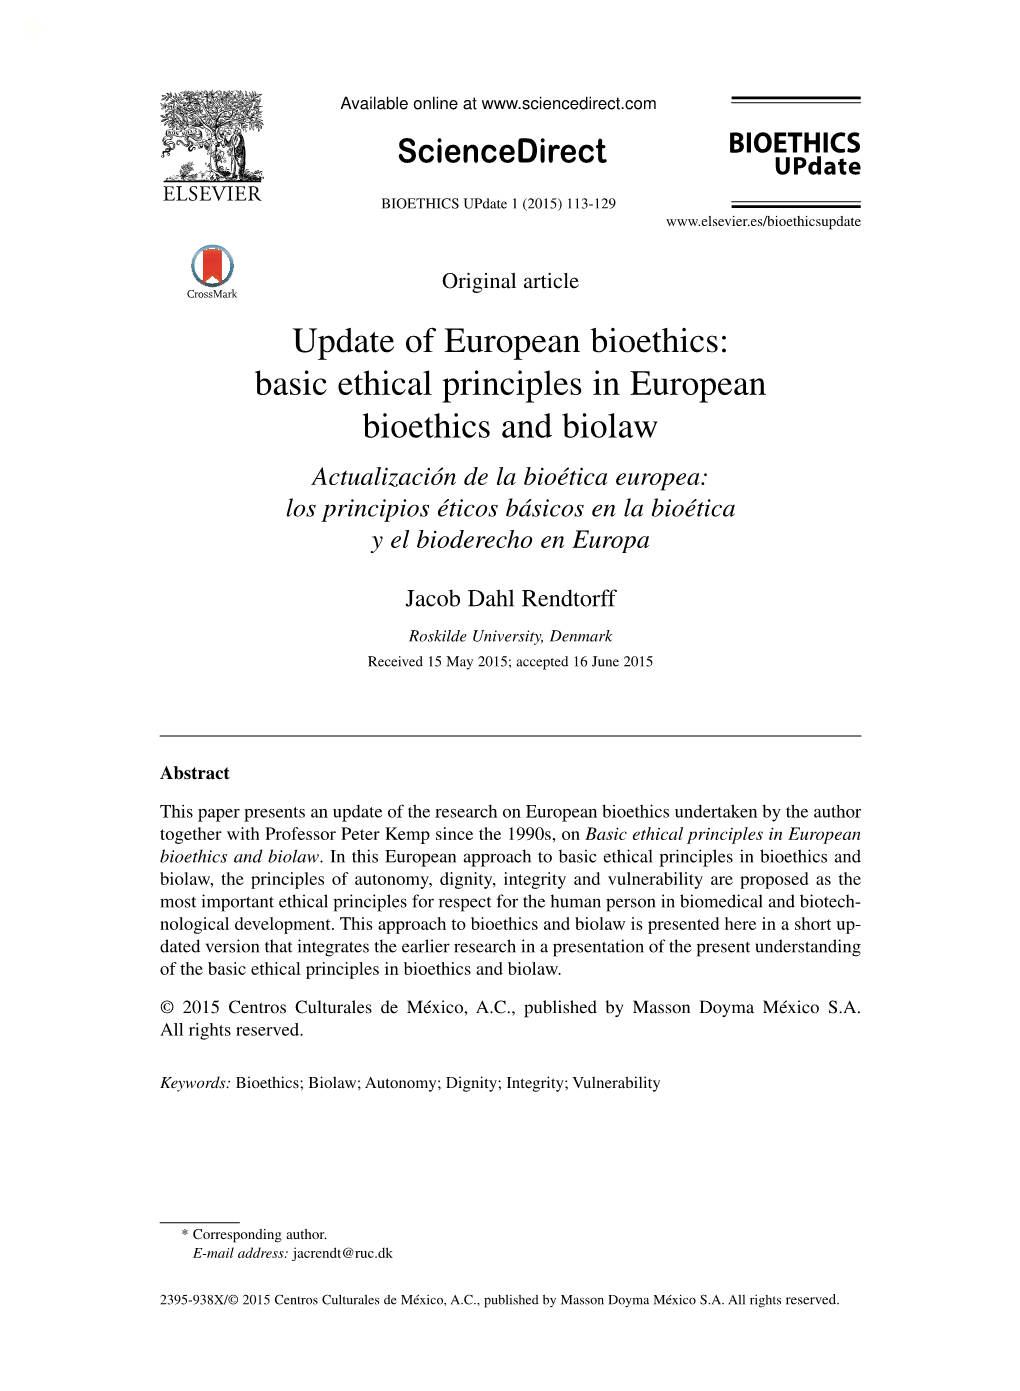 Update of European Bioethics: Basic Ethical Principles in European